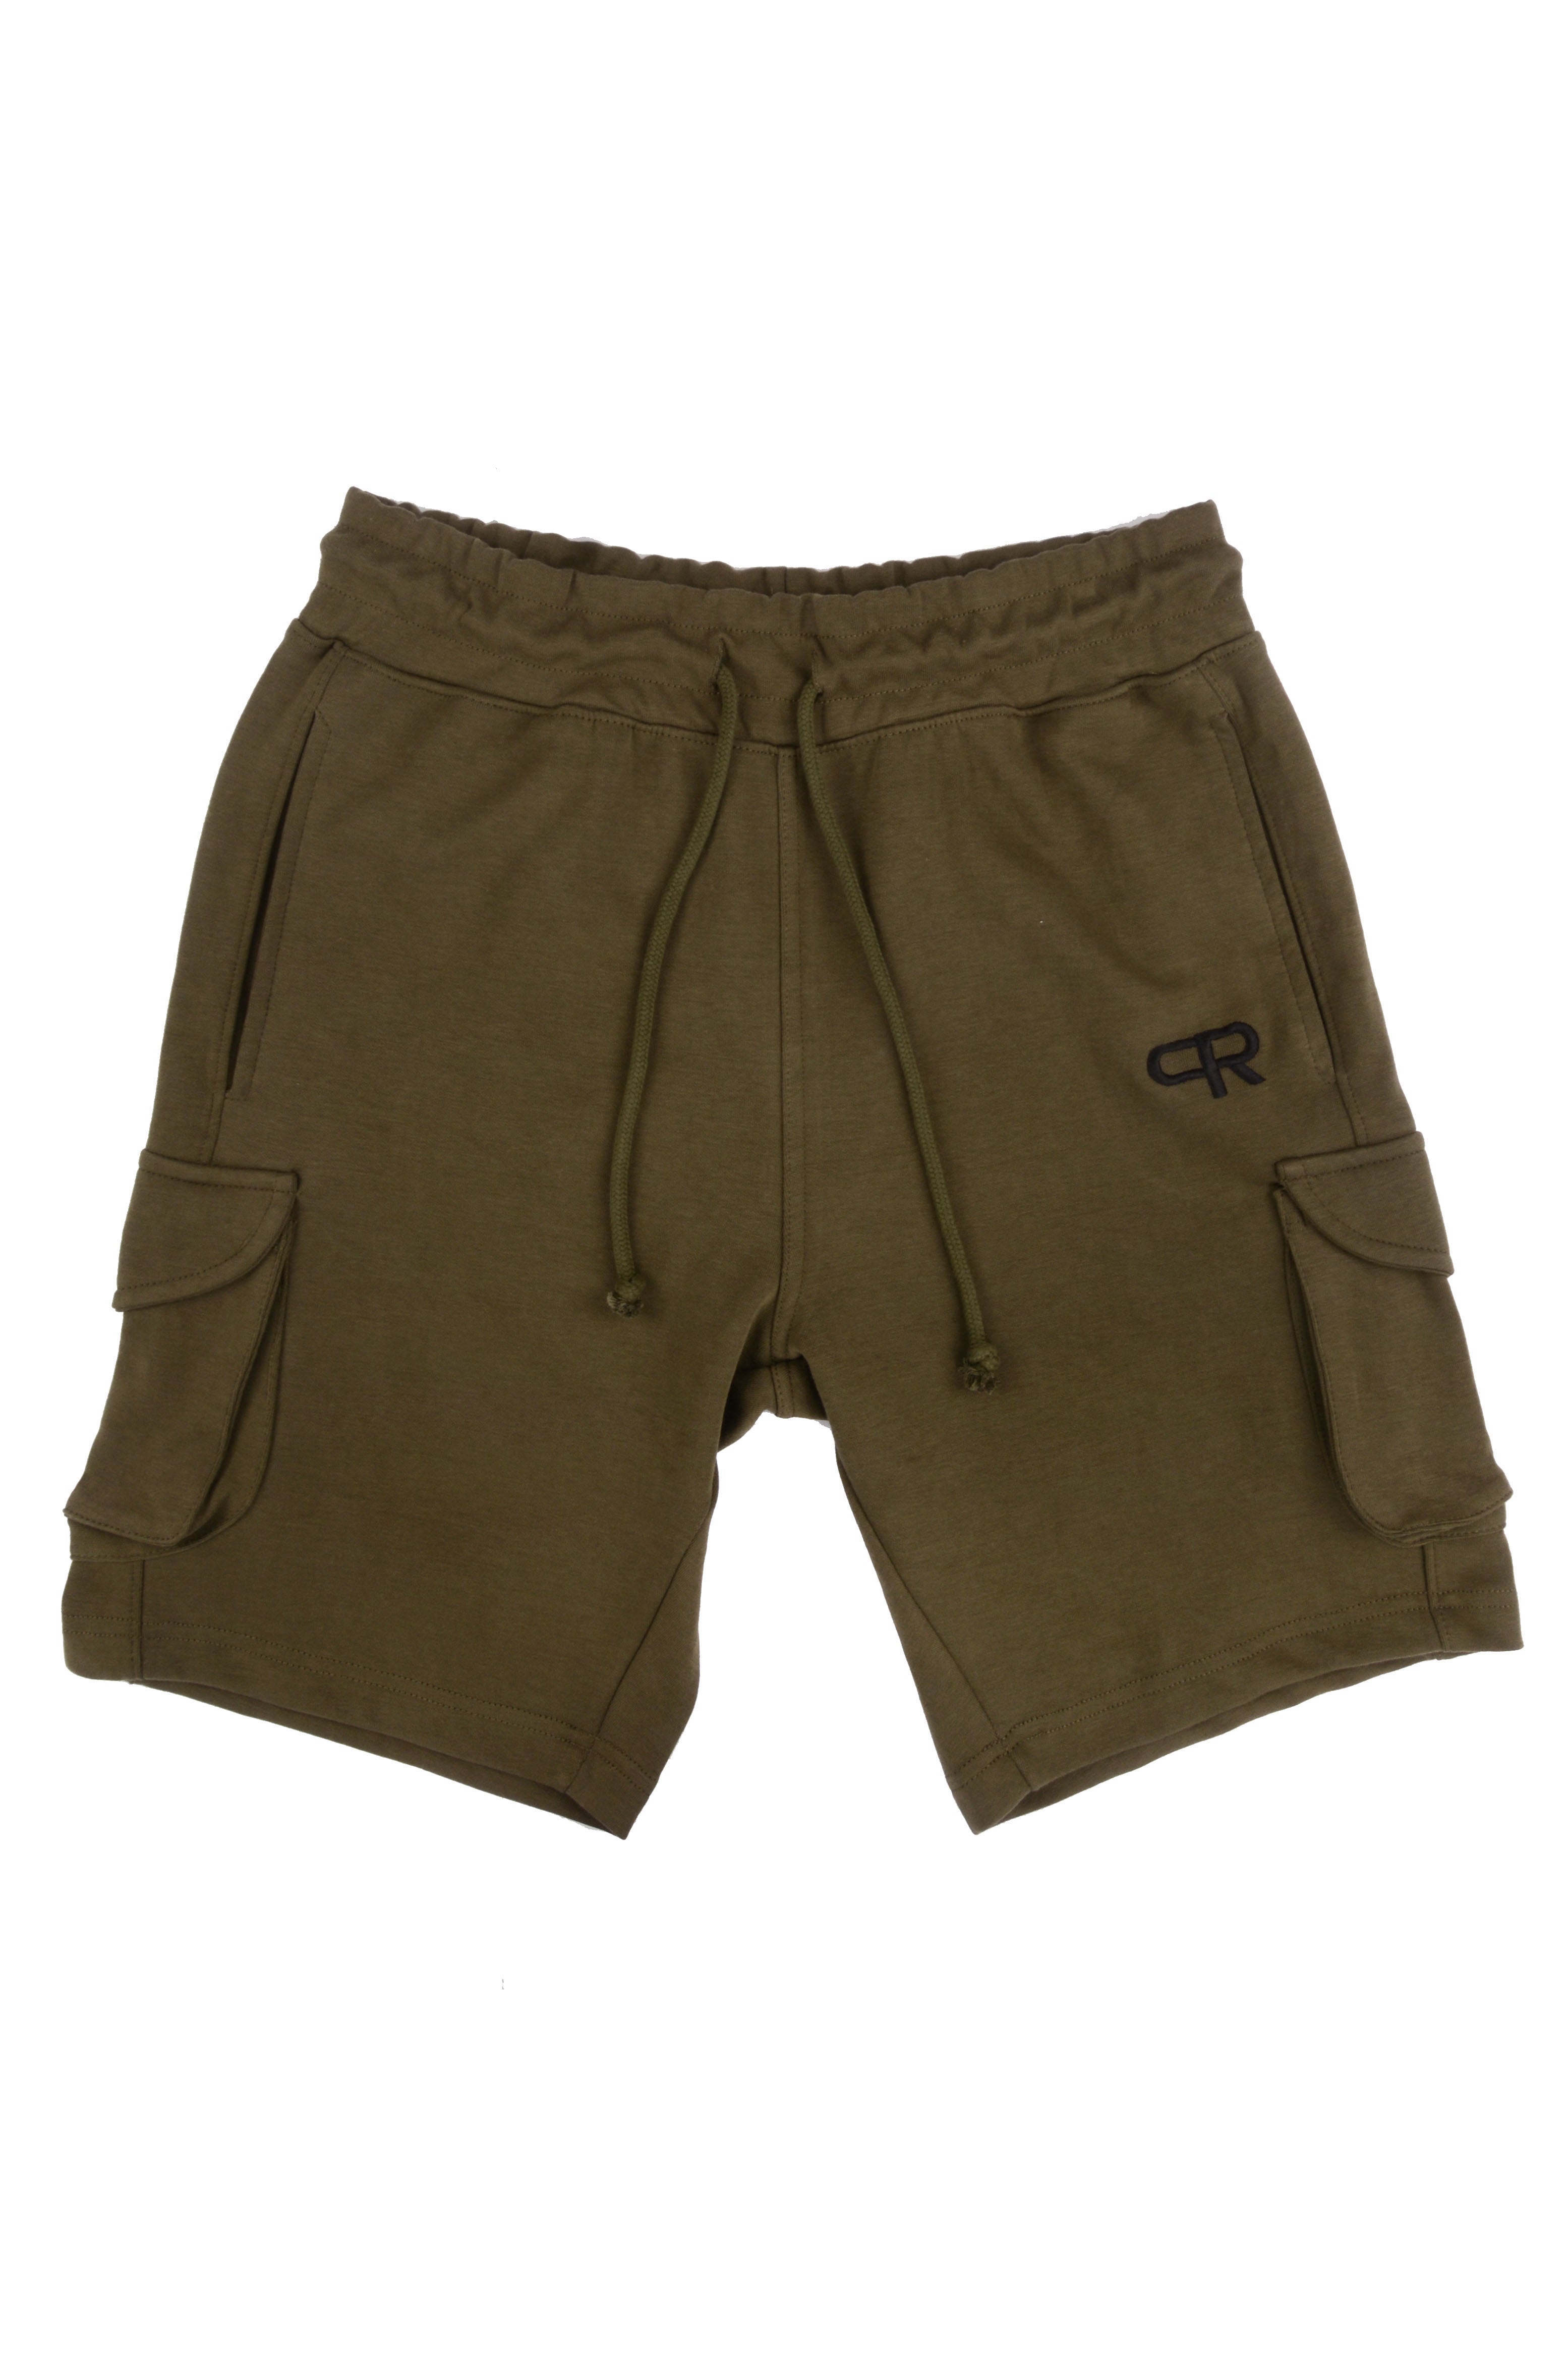 PR Tactical Cargo Shorts - PR104 - Olive